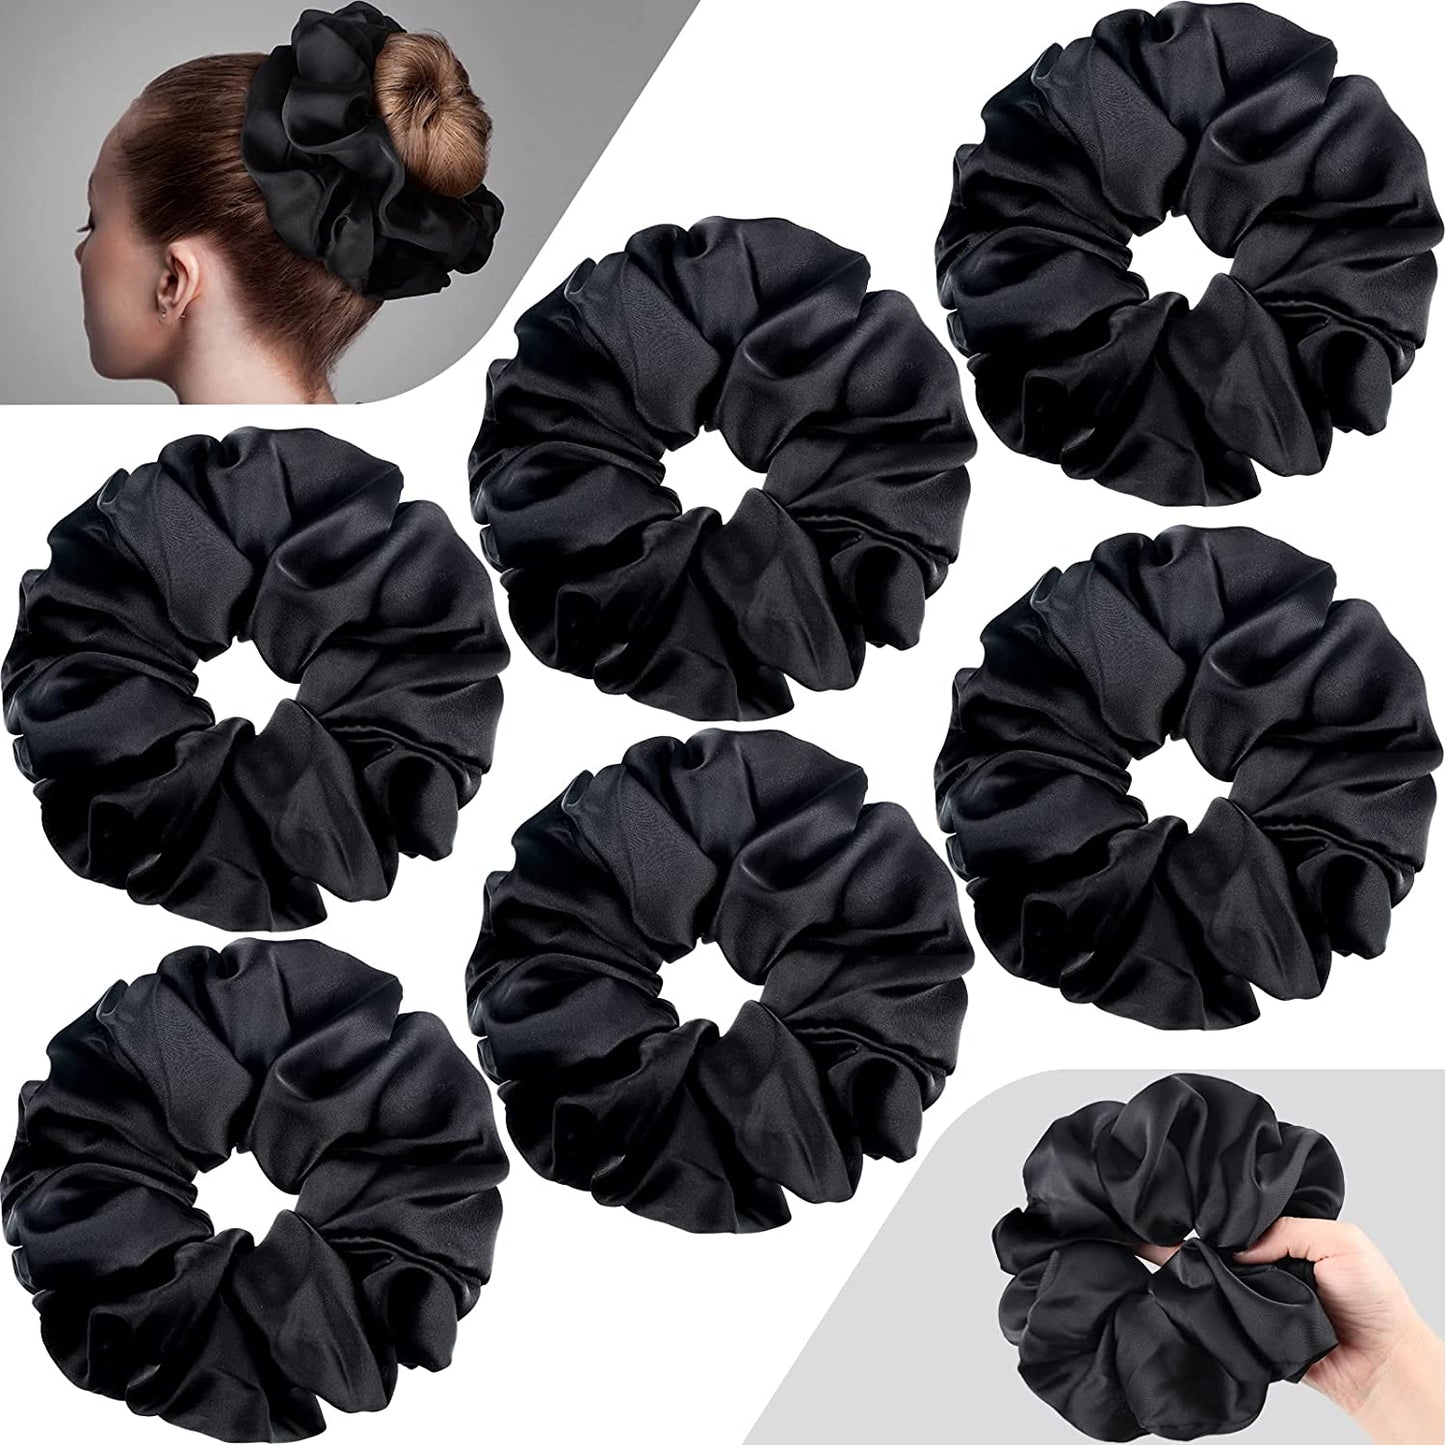 6 Pieces Oversized Black Satin Hair Scrunchies